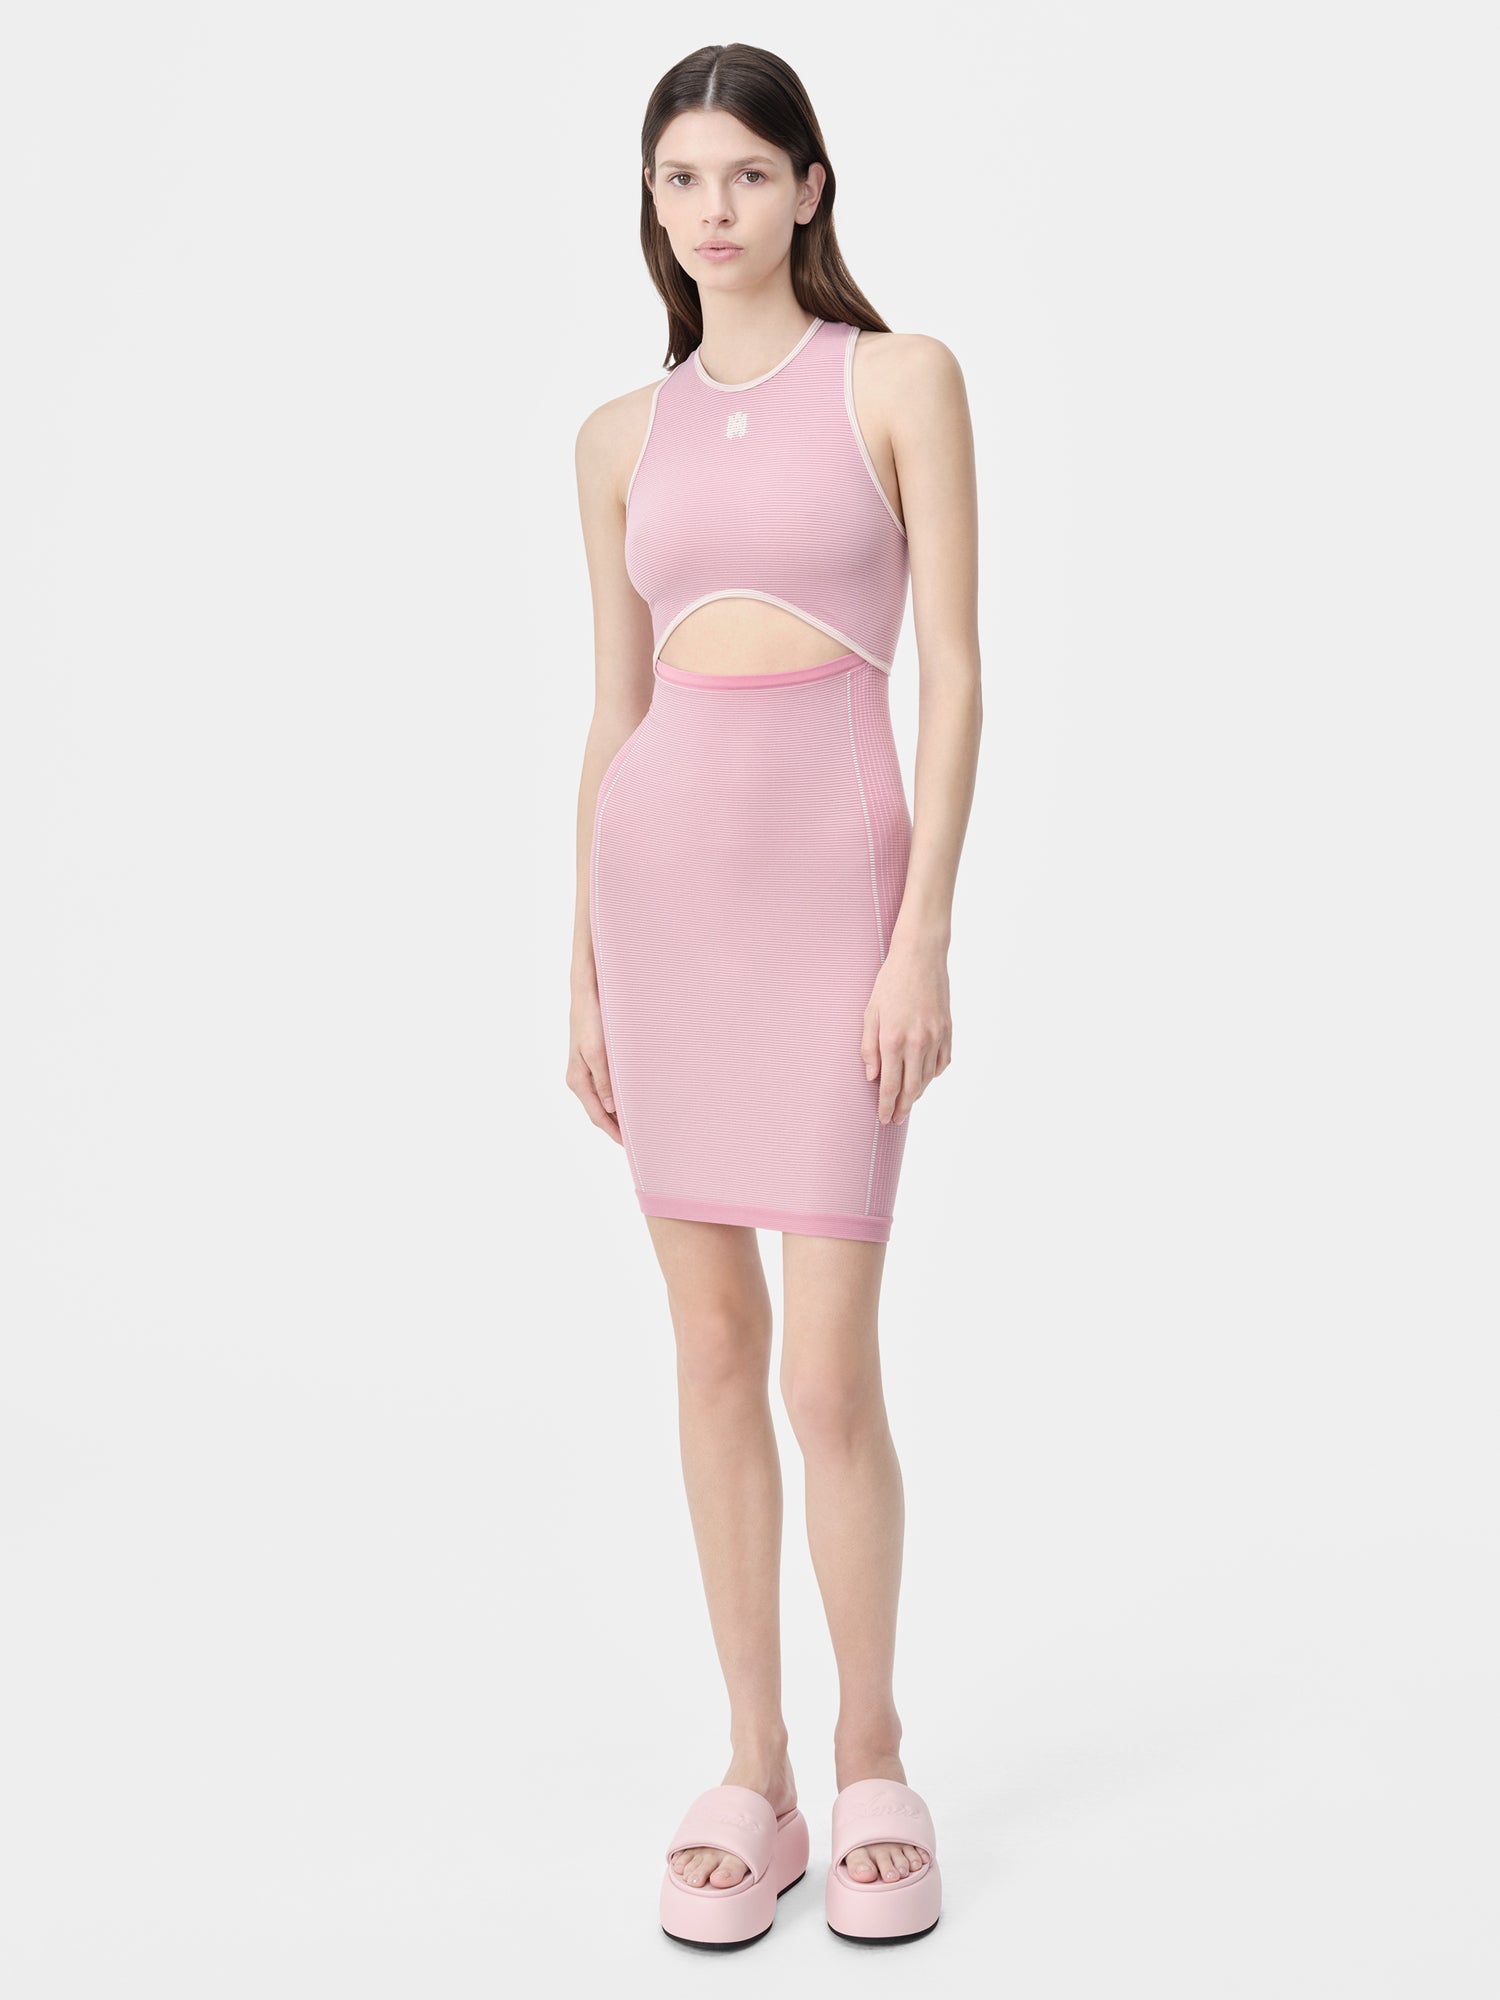 Product WOMEN - WOMEN'S MA SEAMLESS CUT-OUT MINI DRESS - Flamingo Pink featured image